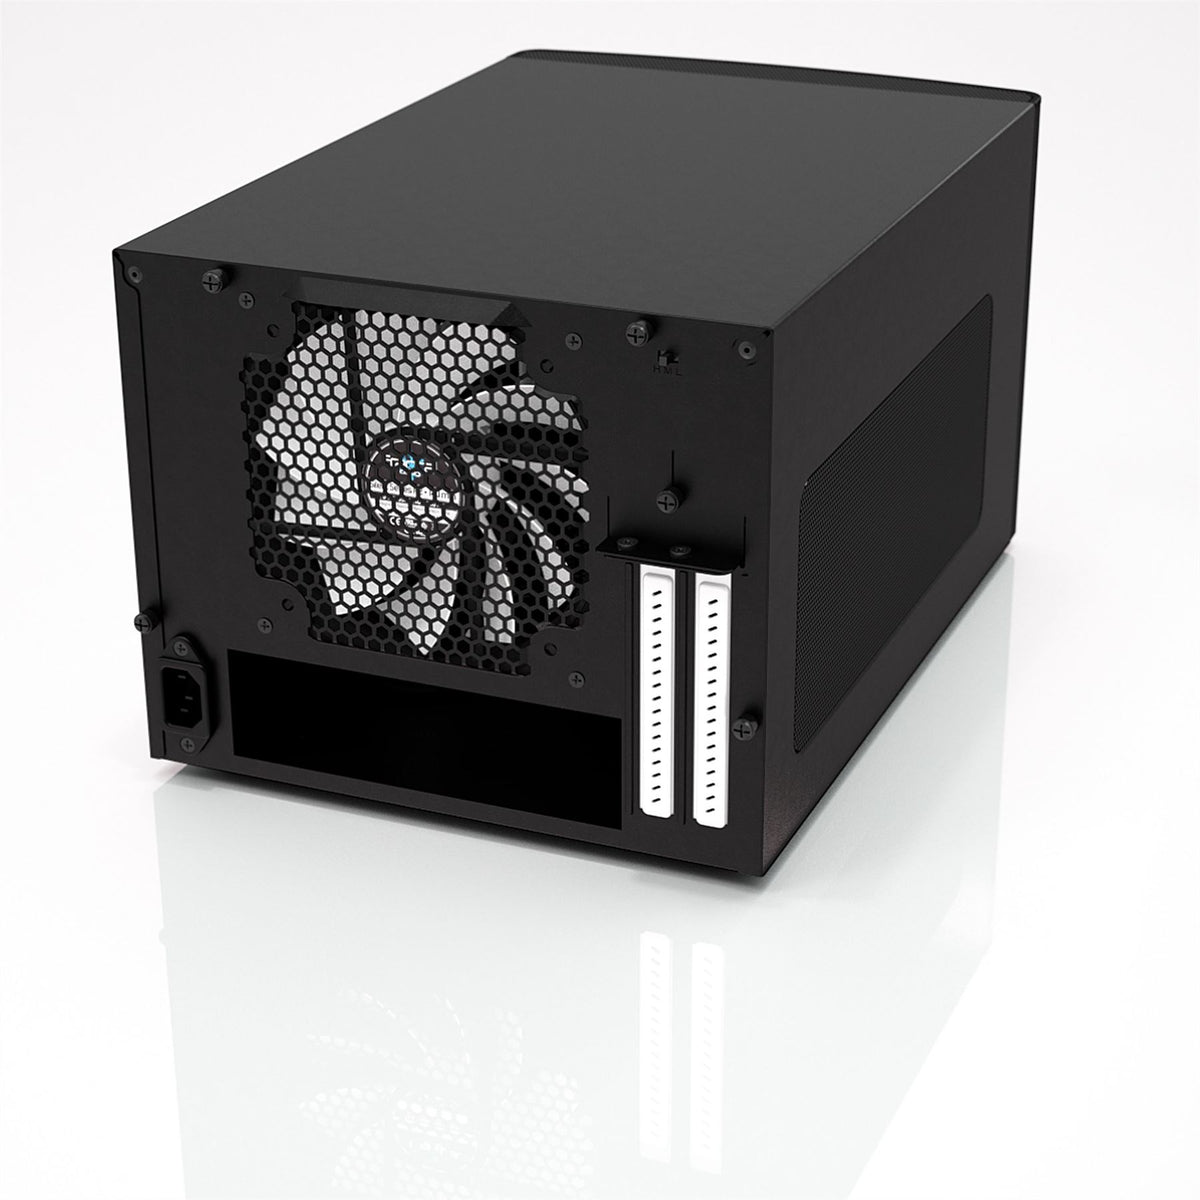 Fractal Design NODE 304 Cube Black PC Case